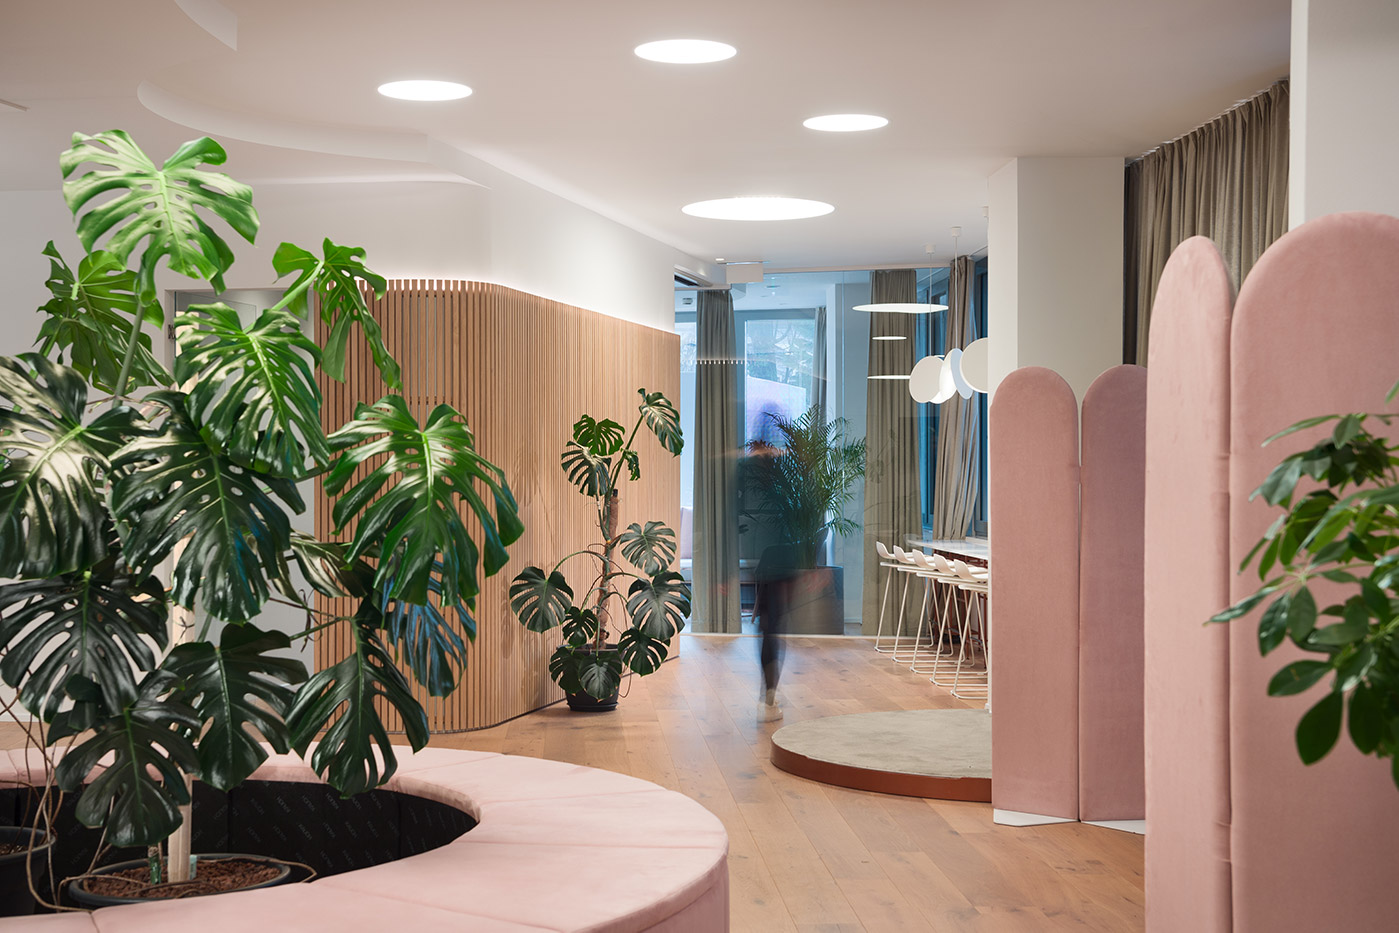 HRM, Office interior design | photo: Janez Marolt